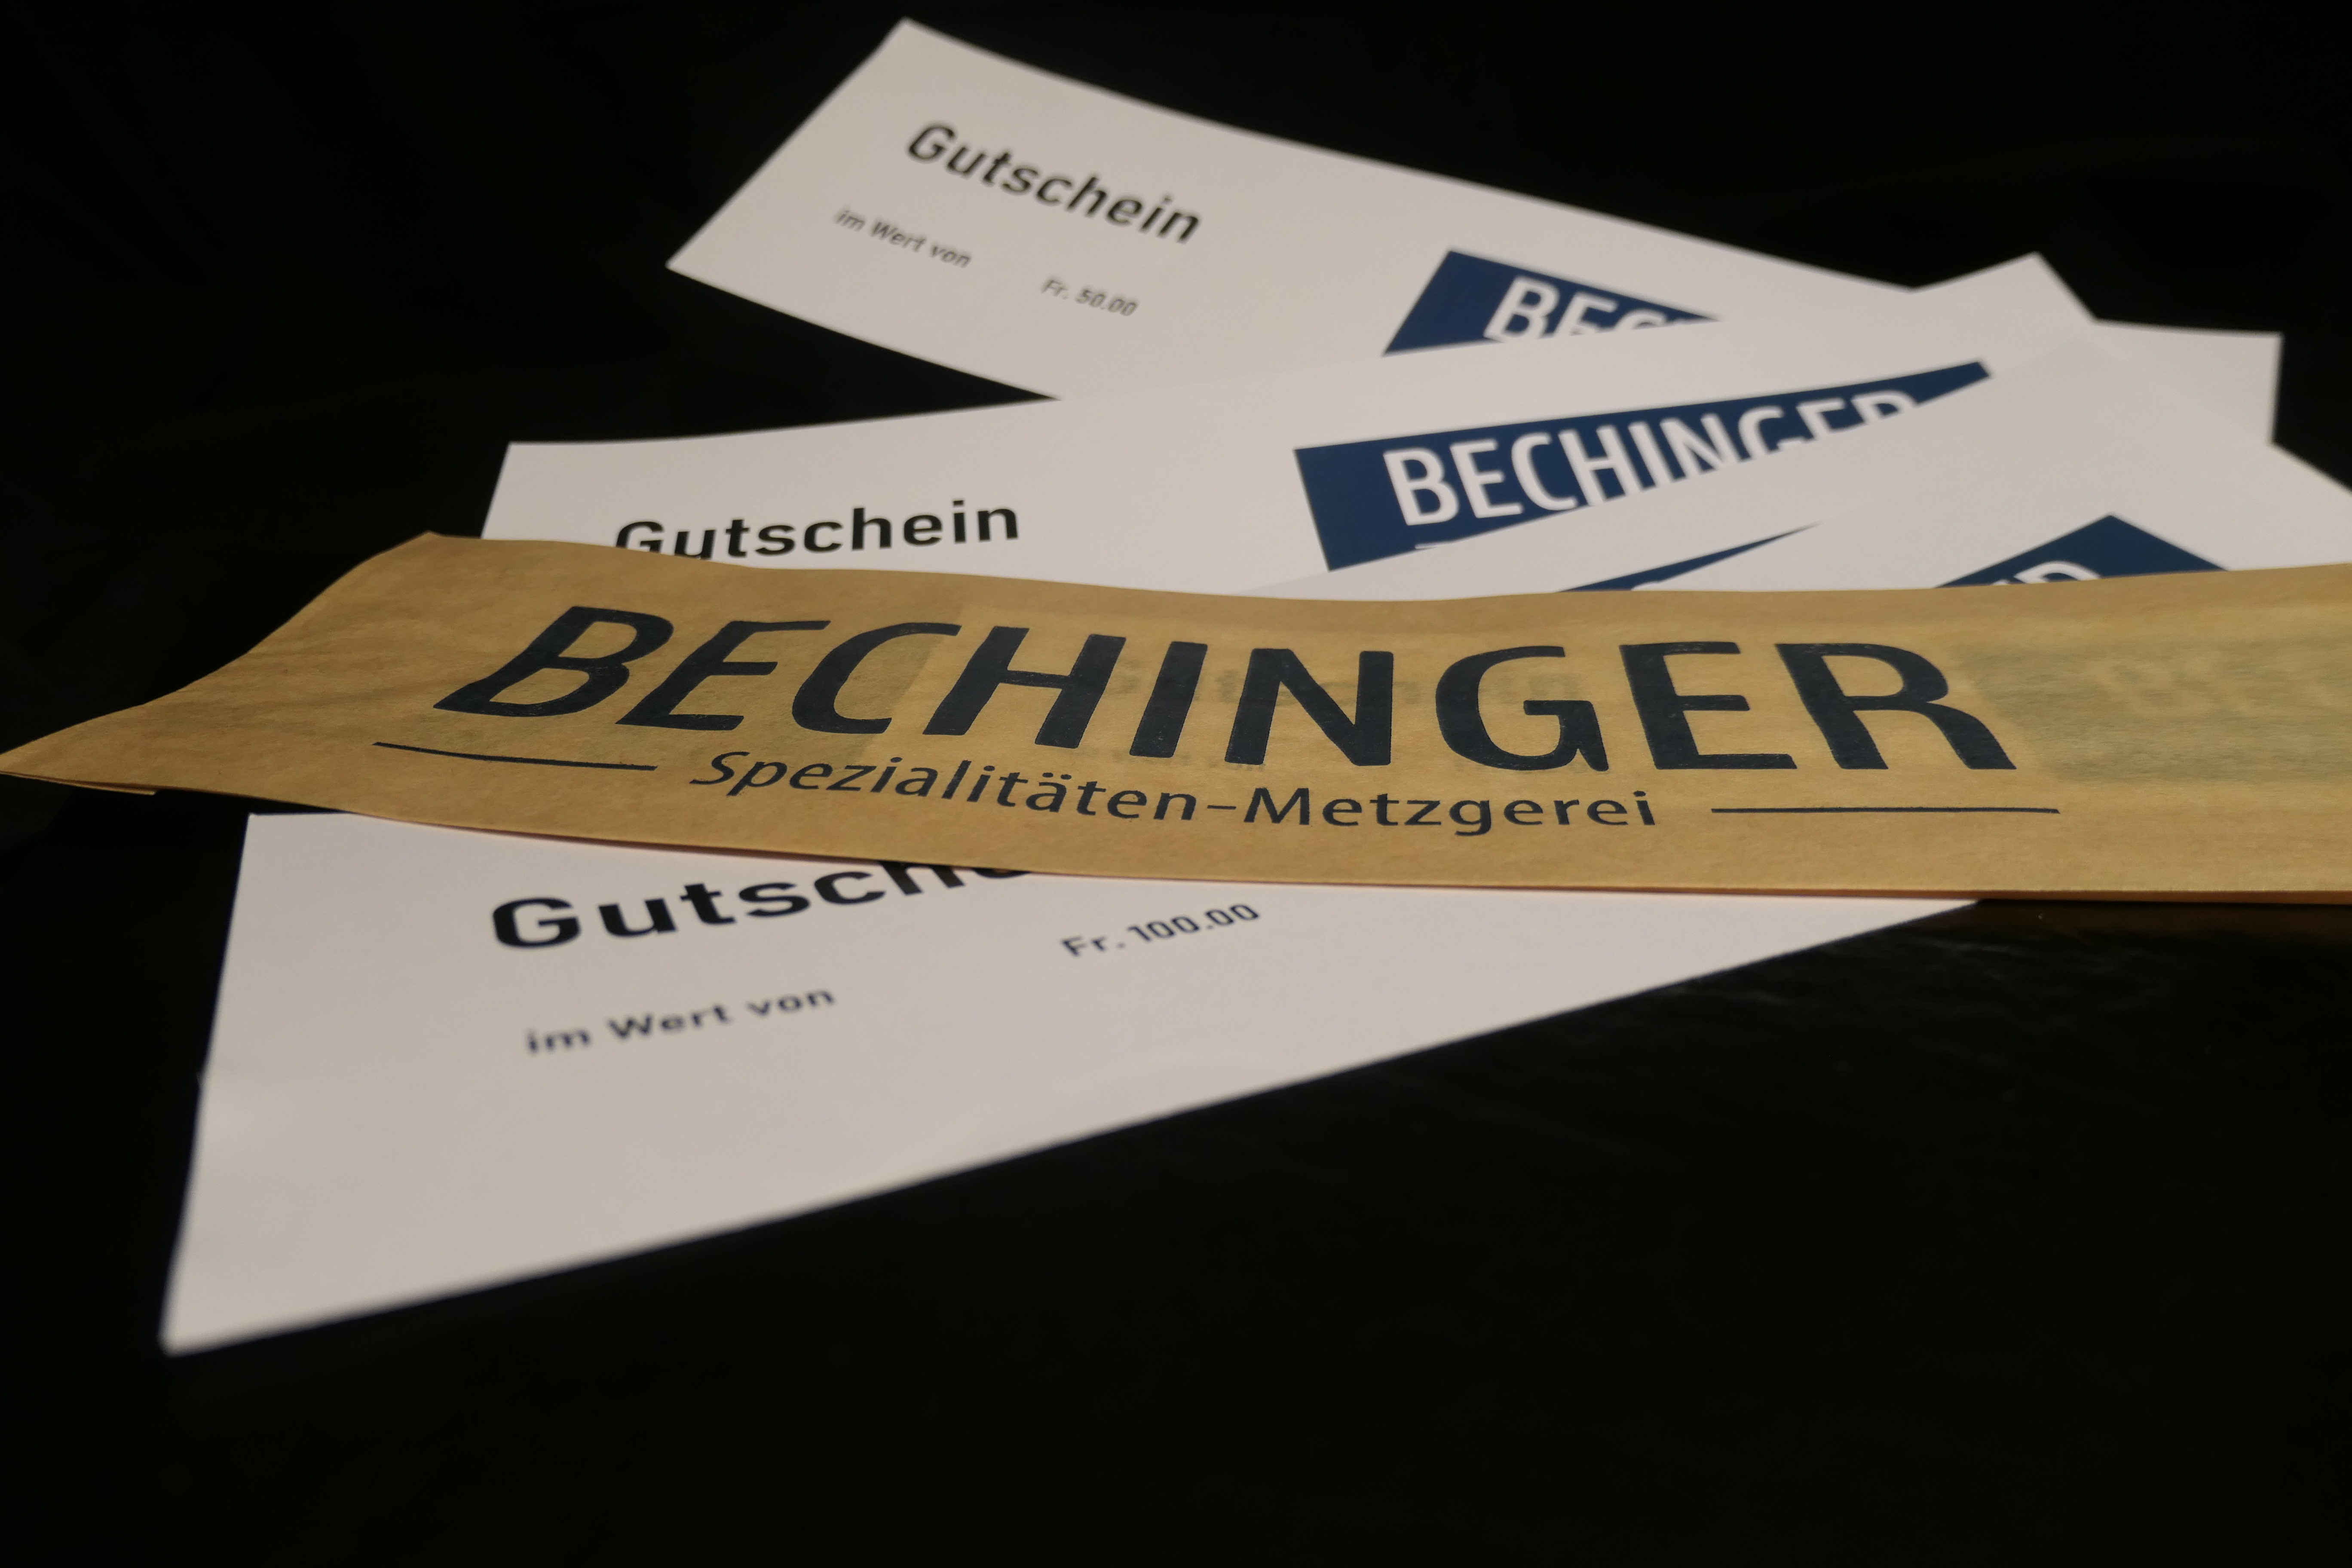 Spezialitäten-Metzgerei Bechinger